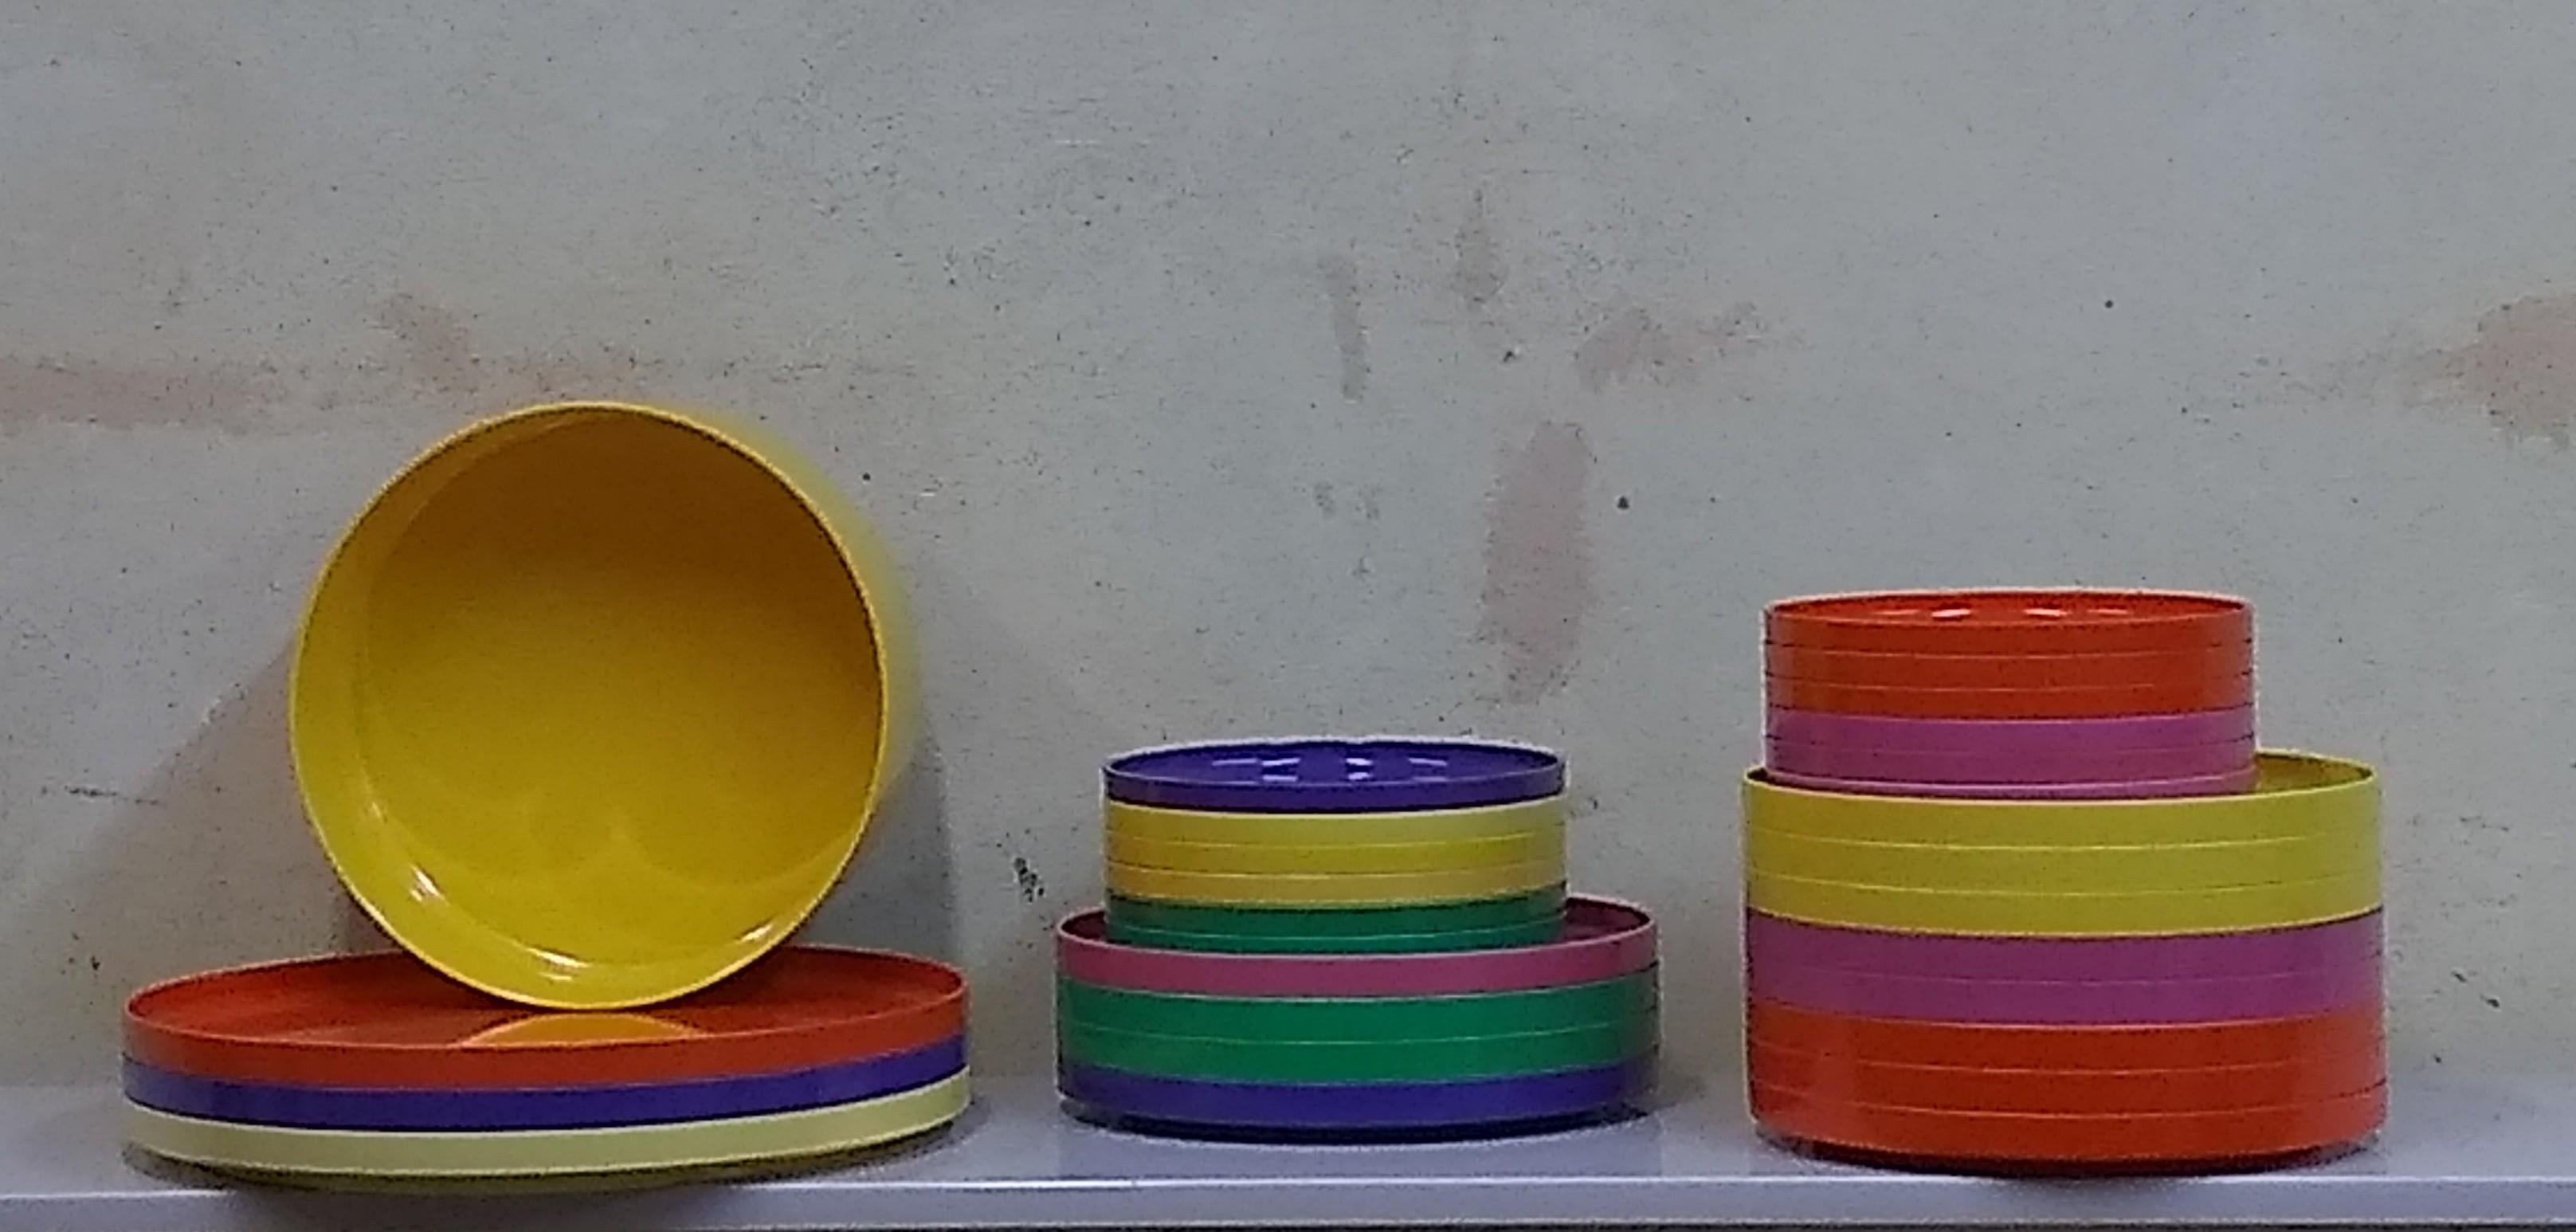 heller plastic dishes